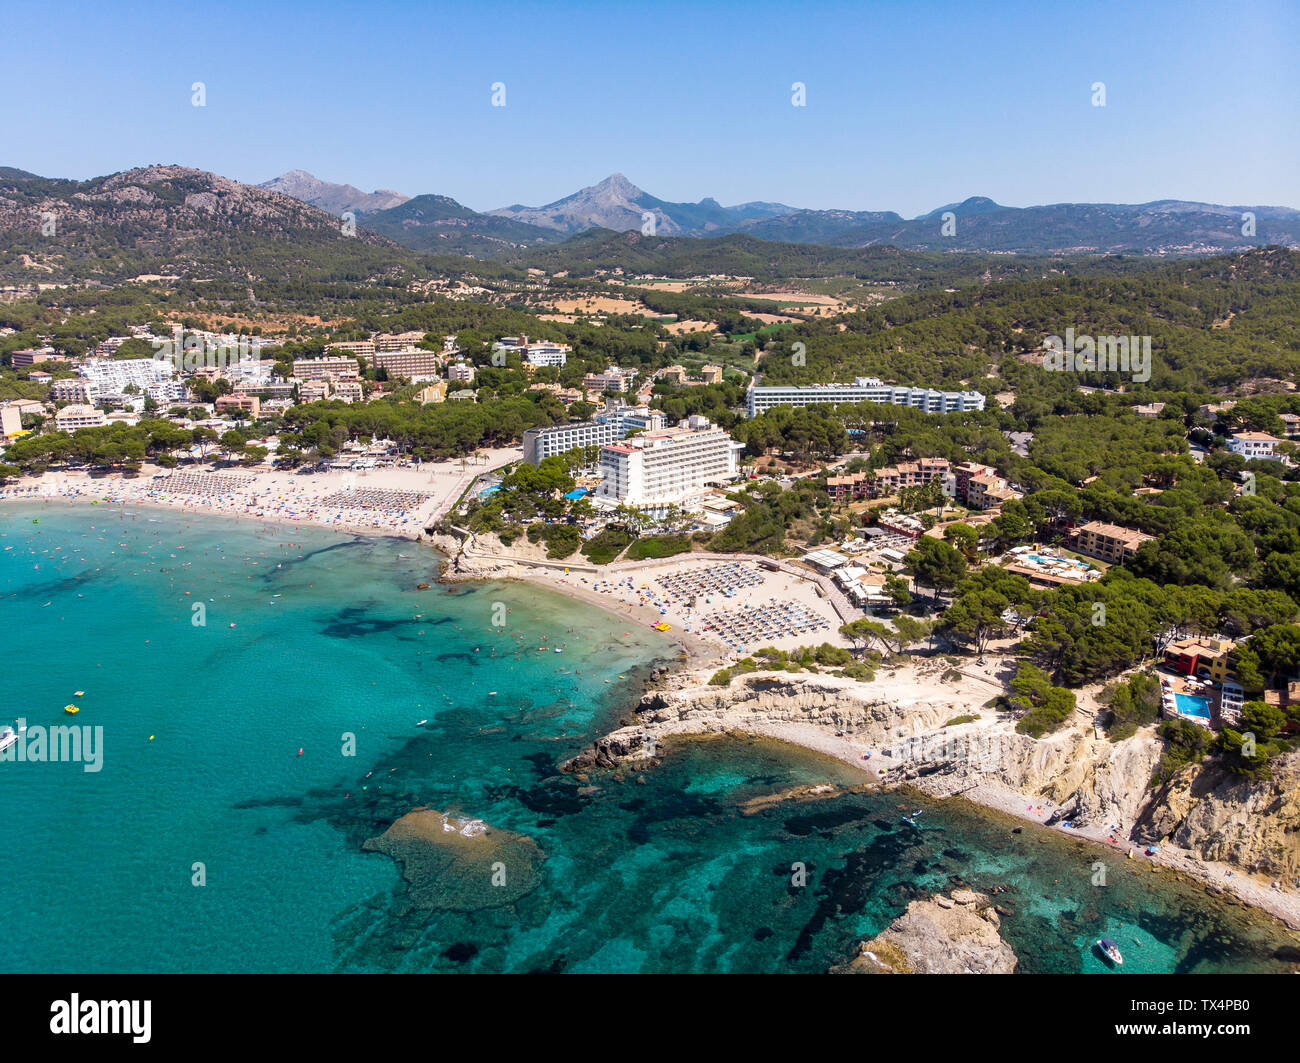 Spain, Majorca, Costa de la Calma, aerial view over Peguera with hotels and beaches Stock Photo